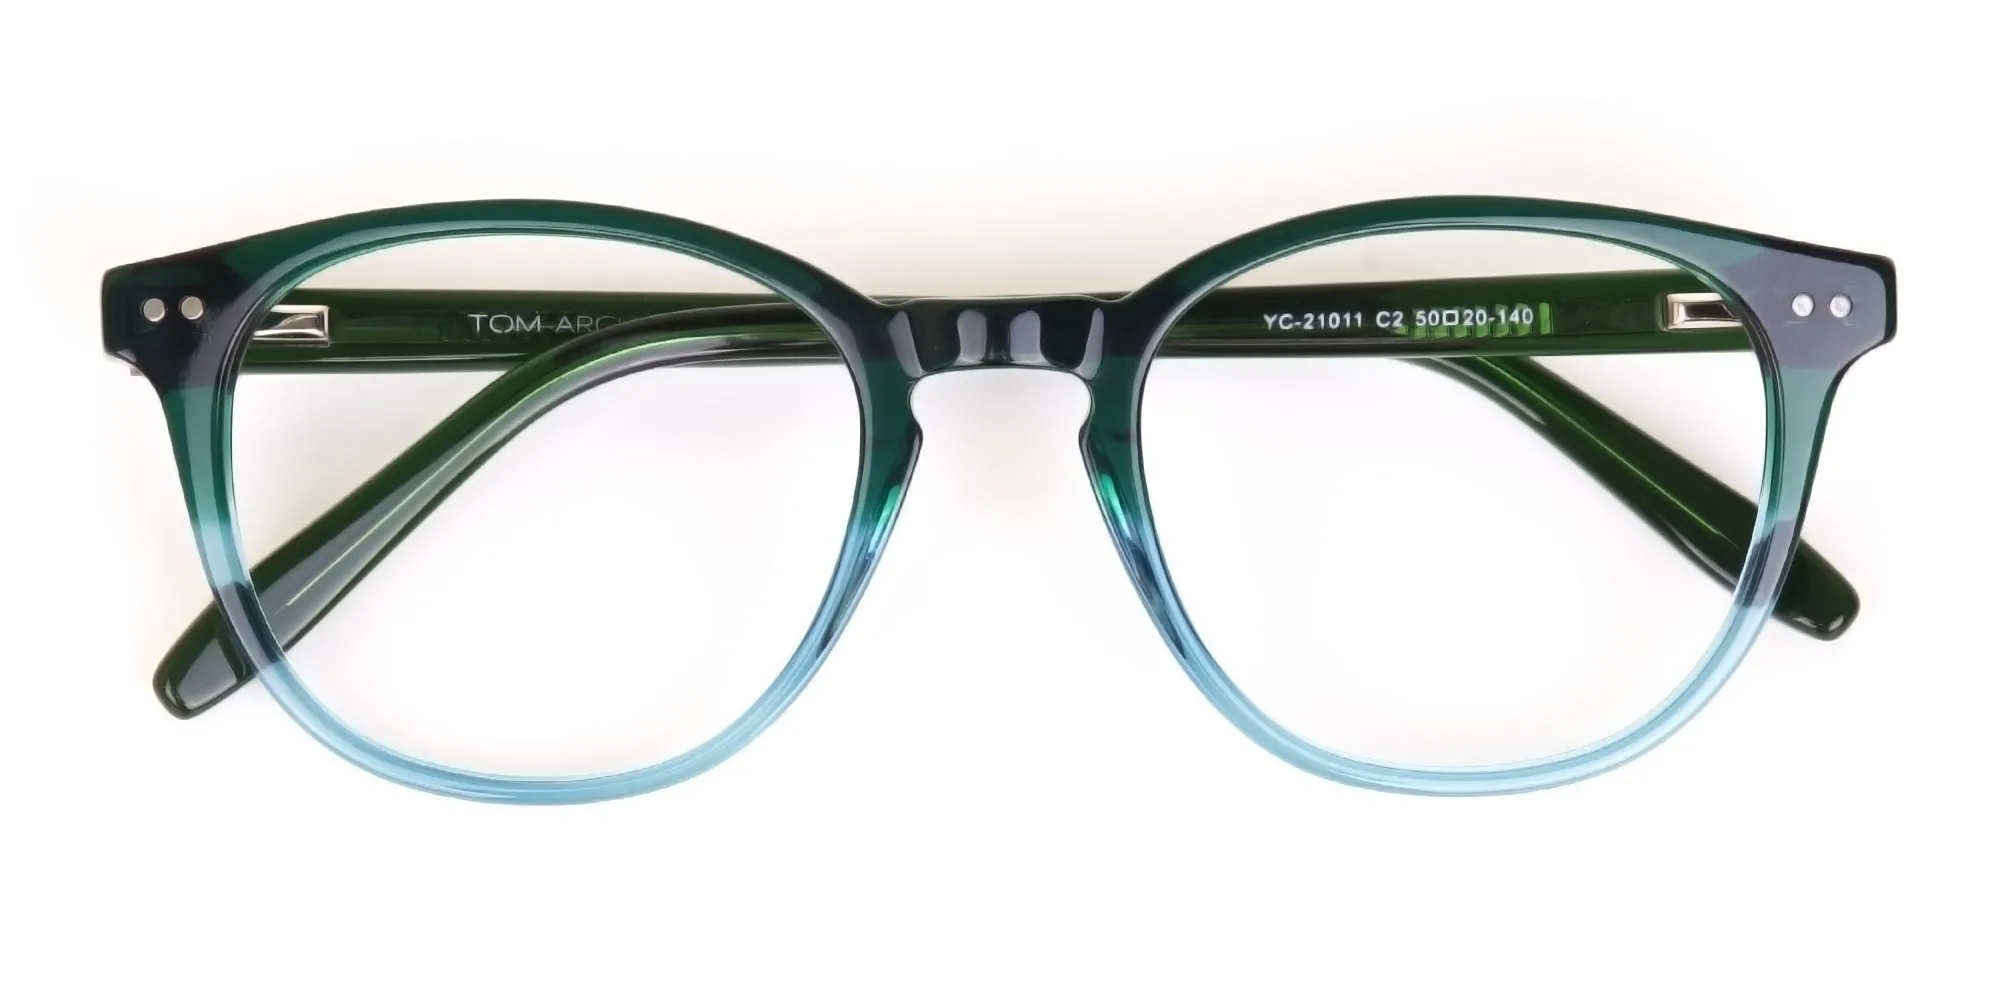 Hunter Green & Teal Two-Tone Glasses-2